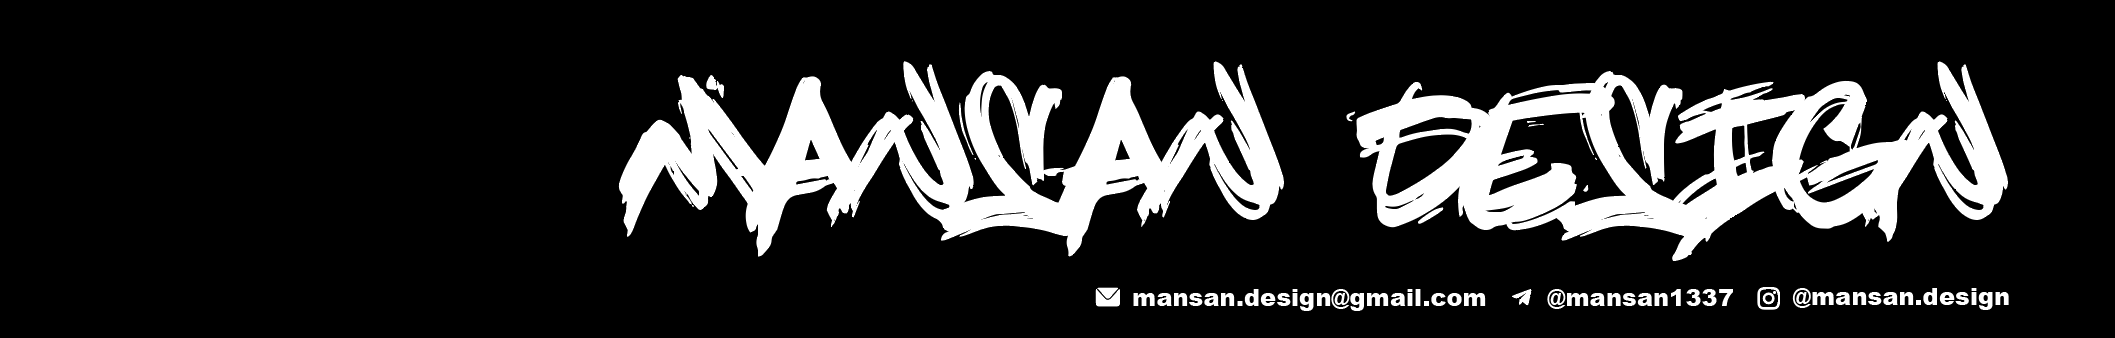 mansan design's profile banner